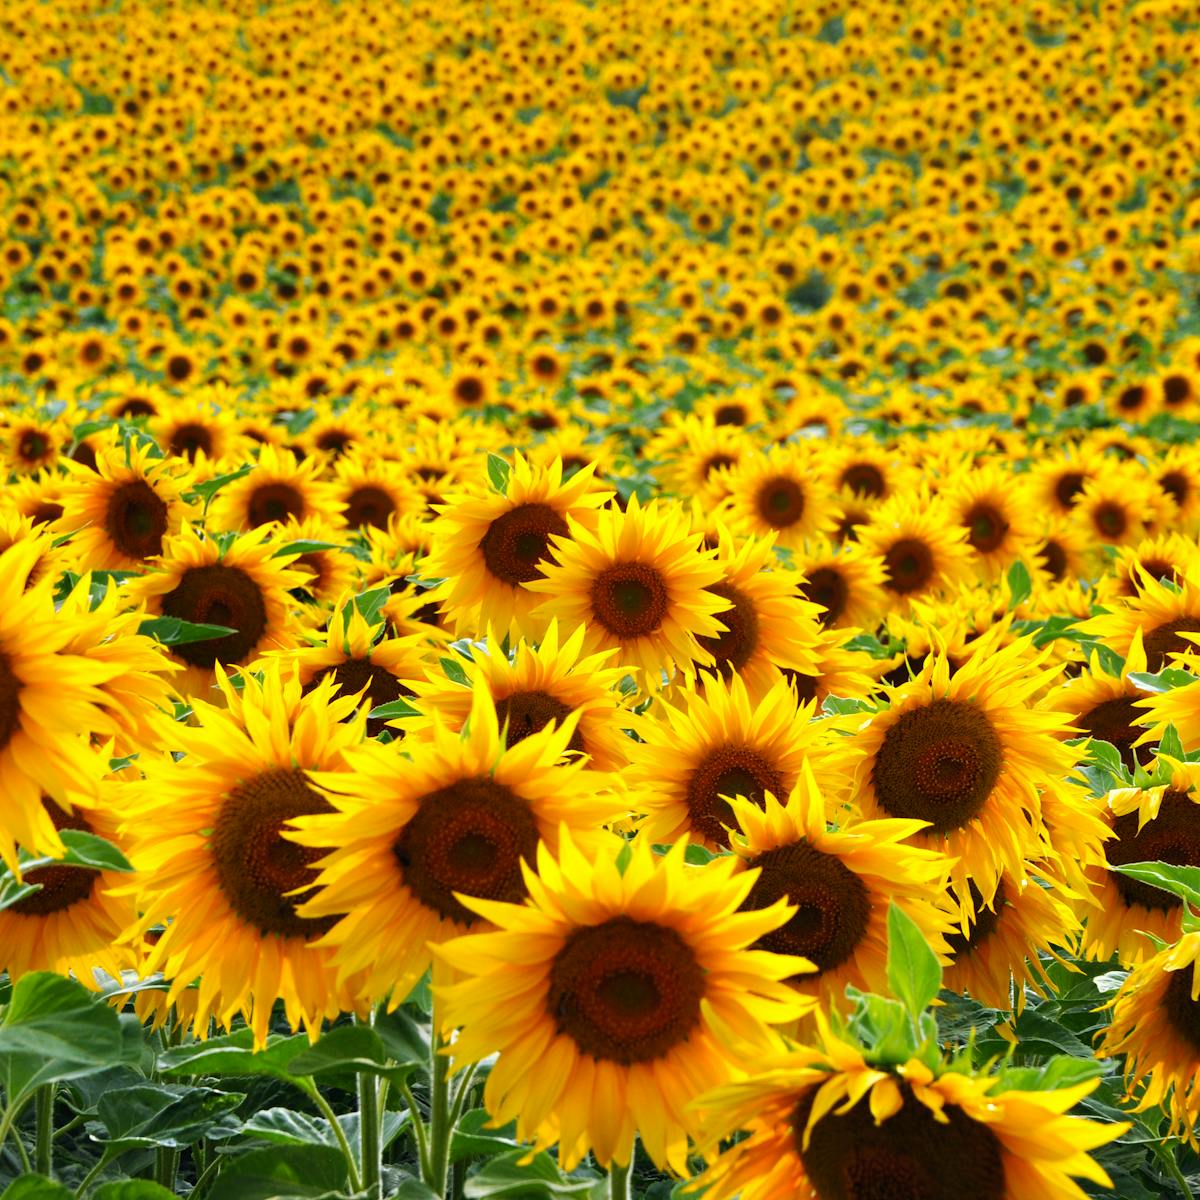 Making Sunlight Liquid A Brief History Of Sunflowers